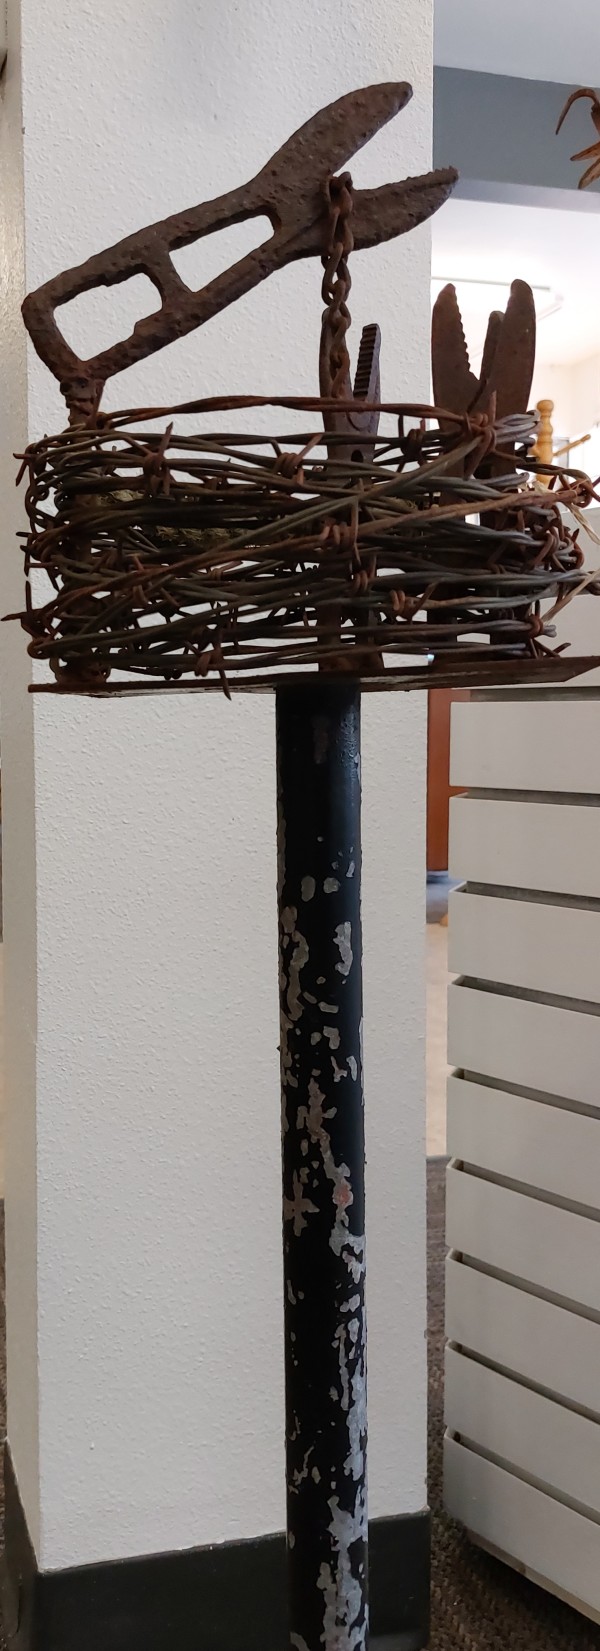 Bird's Nest by Curt Swarm